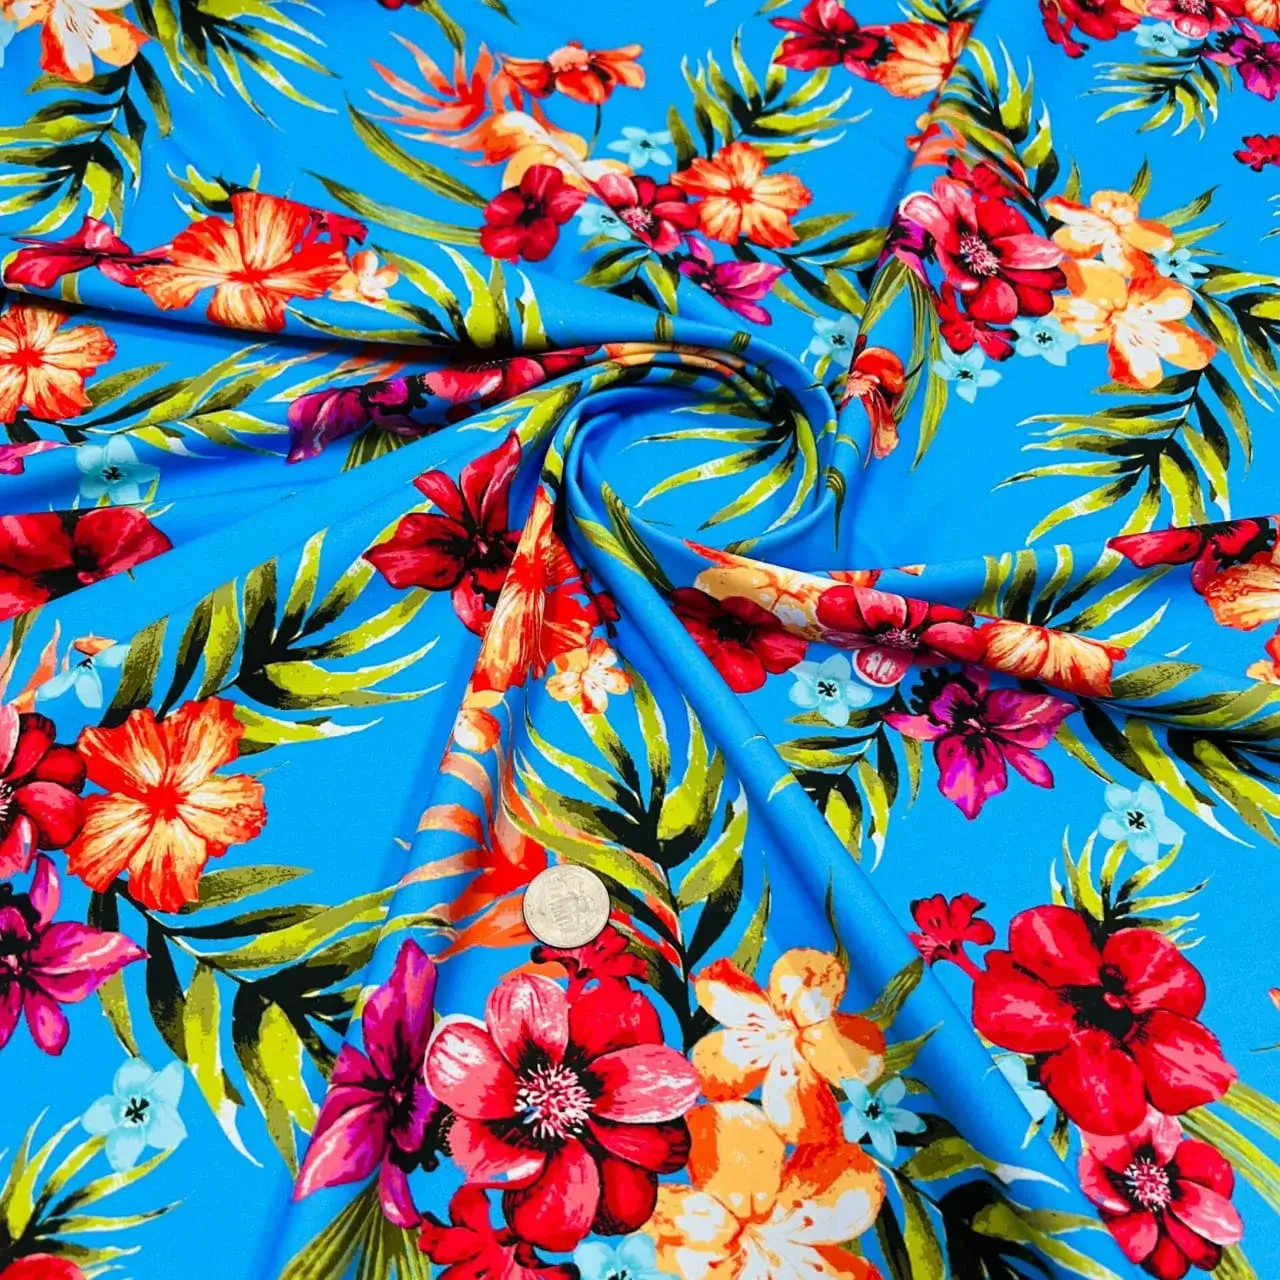 Hawaiian Tropical Flowers Print Nylon Lycra Spandex fabric four way Stretch  by Yard for swimwear dancewear dress gymwear (243-8)